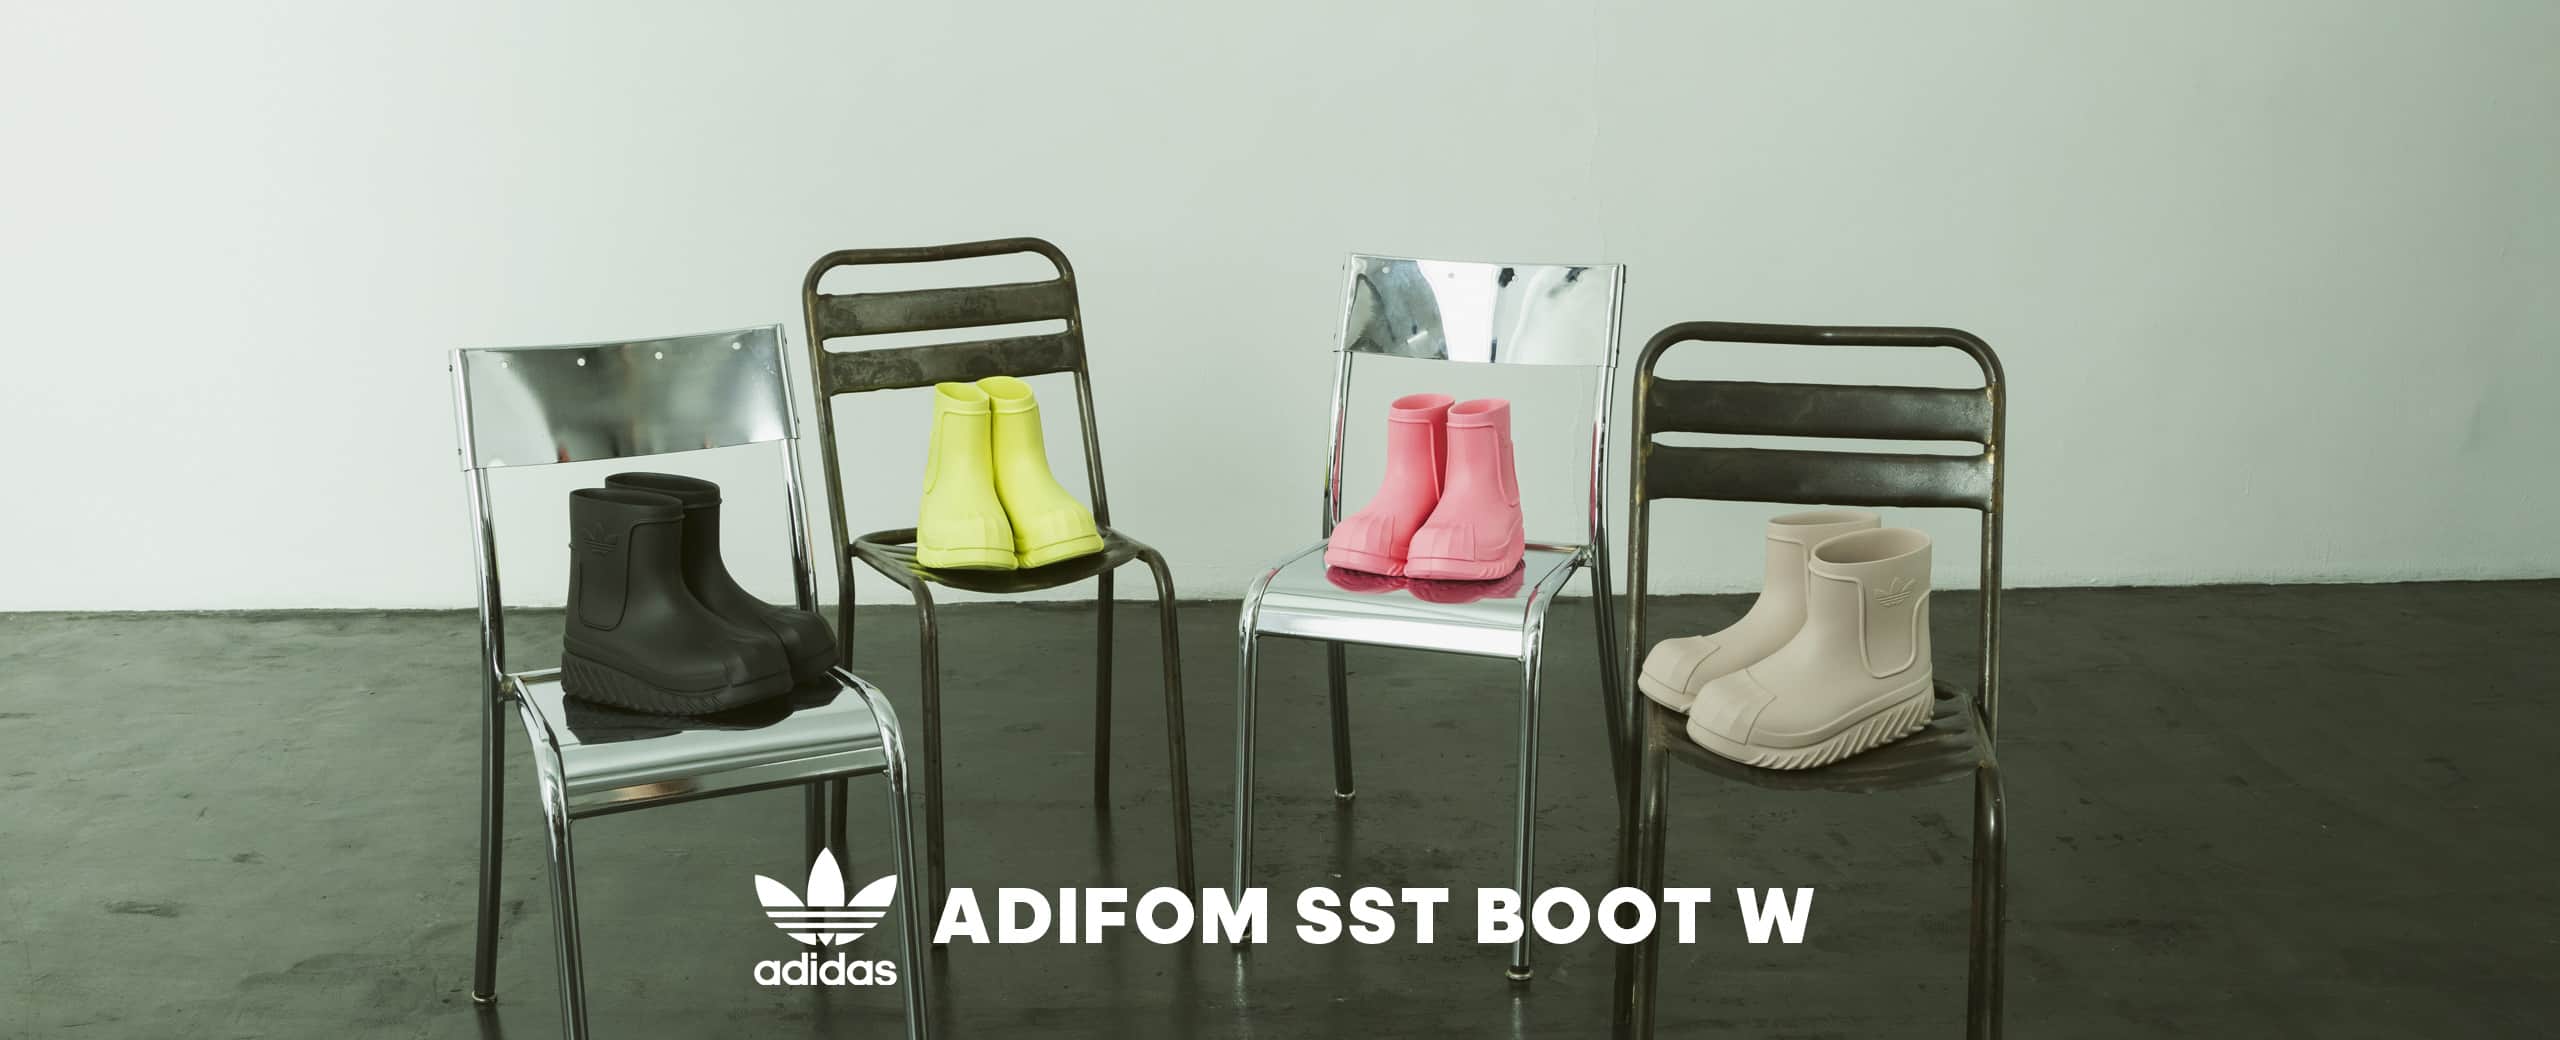 "adidas Originals ADIFOM SST BOOT W"